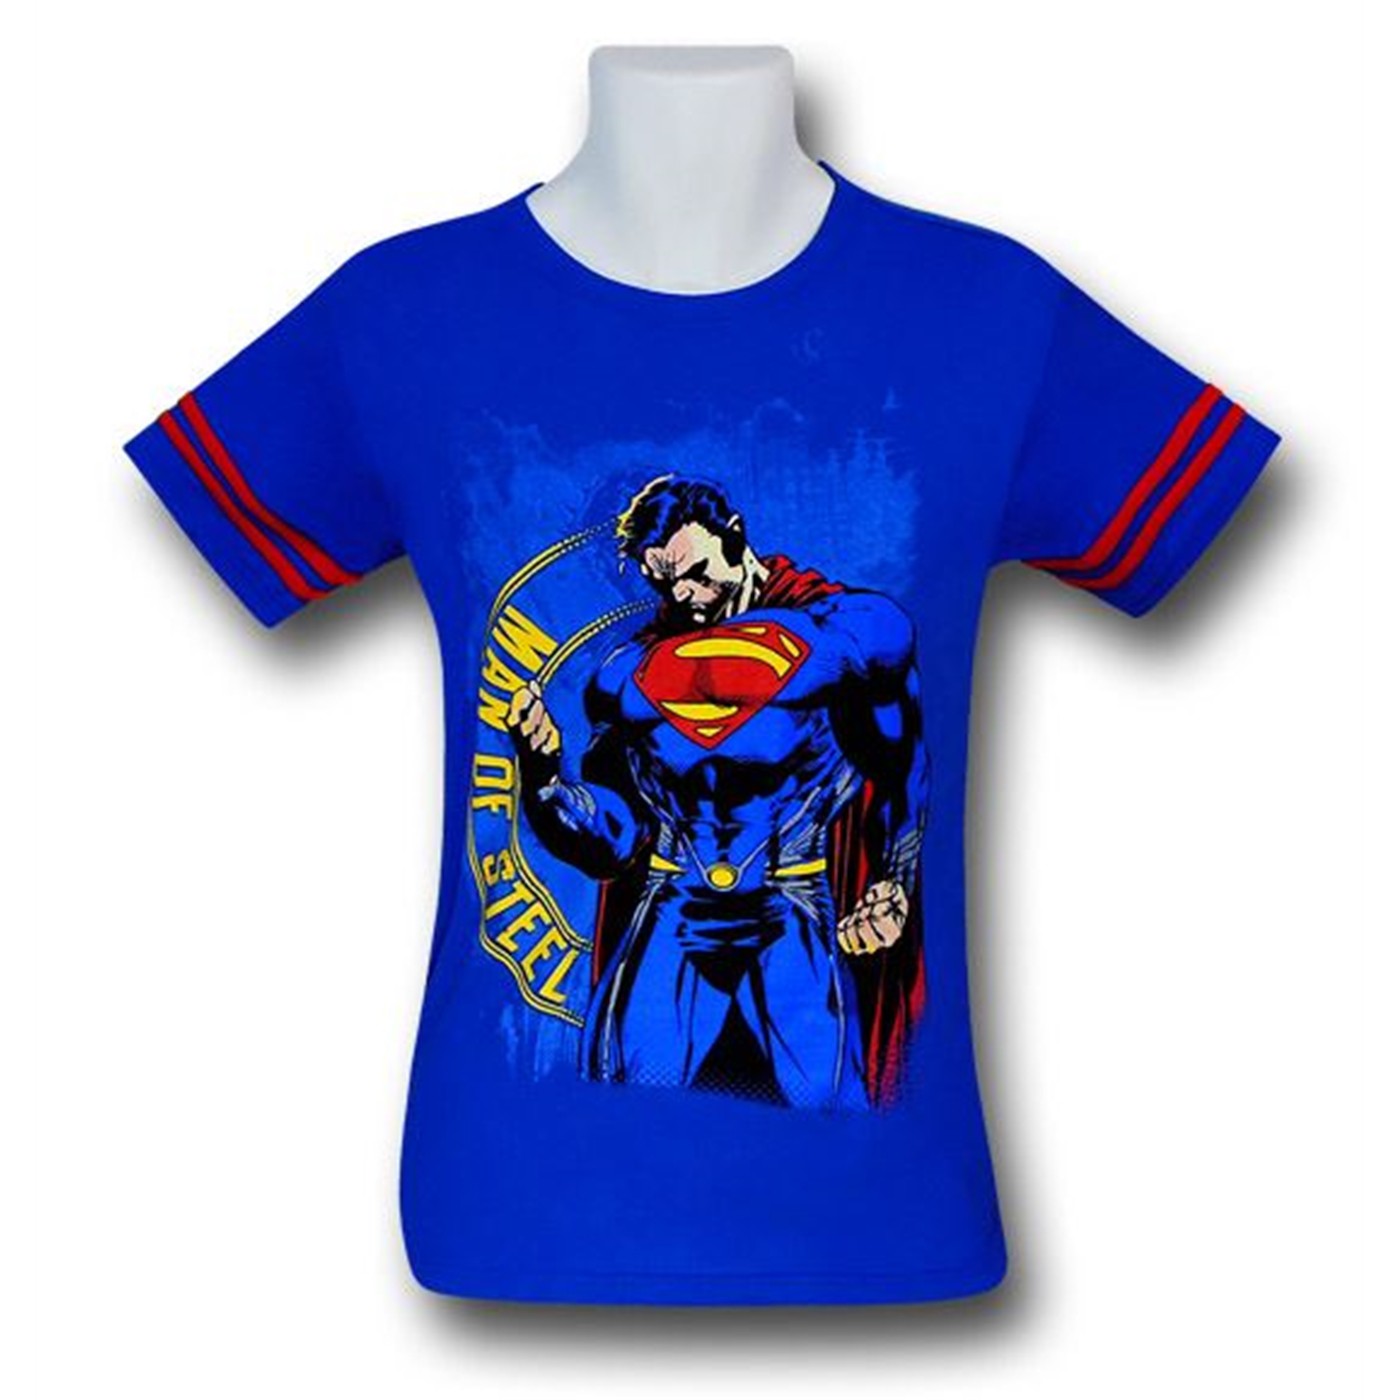 Superman Man of Steel Image Kids T-Shirt